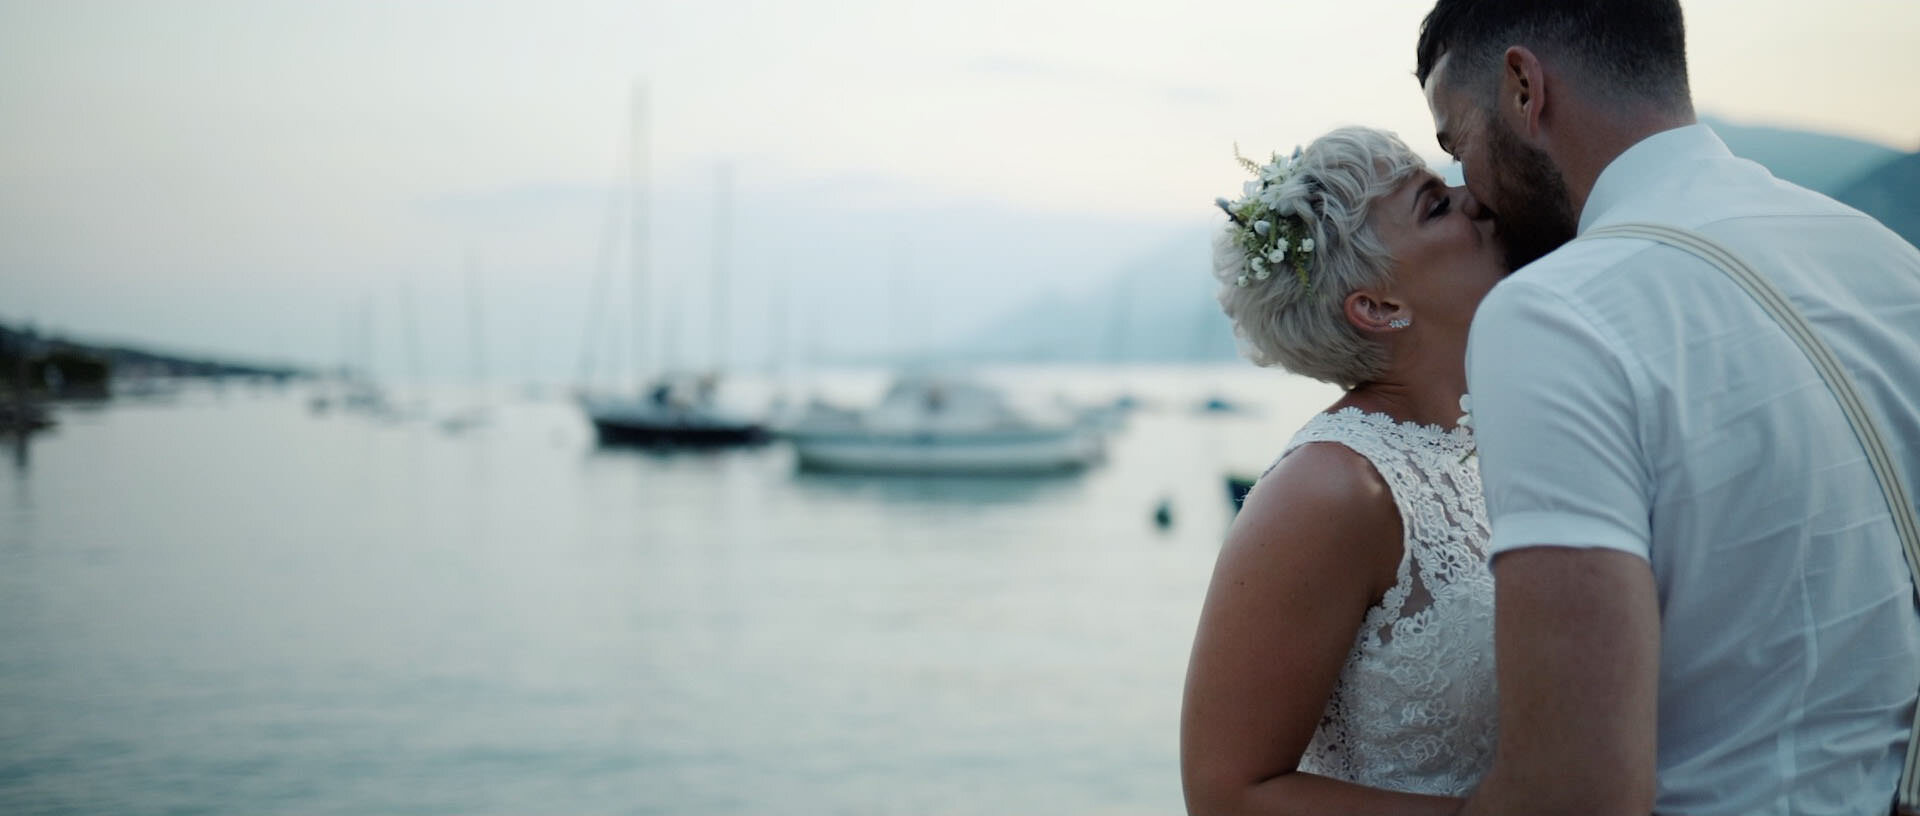 Emma & Tom Destination Wedding Film Video in Malcesine Italy 5.jpg